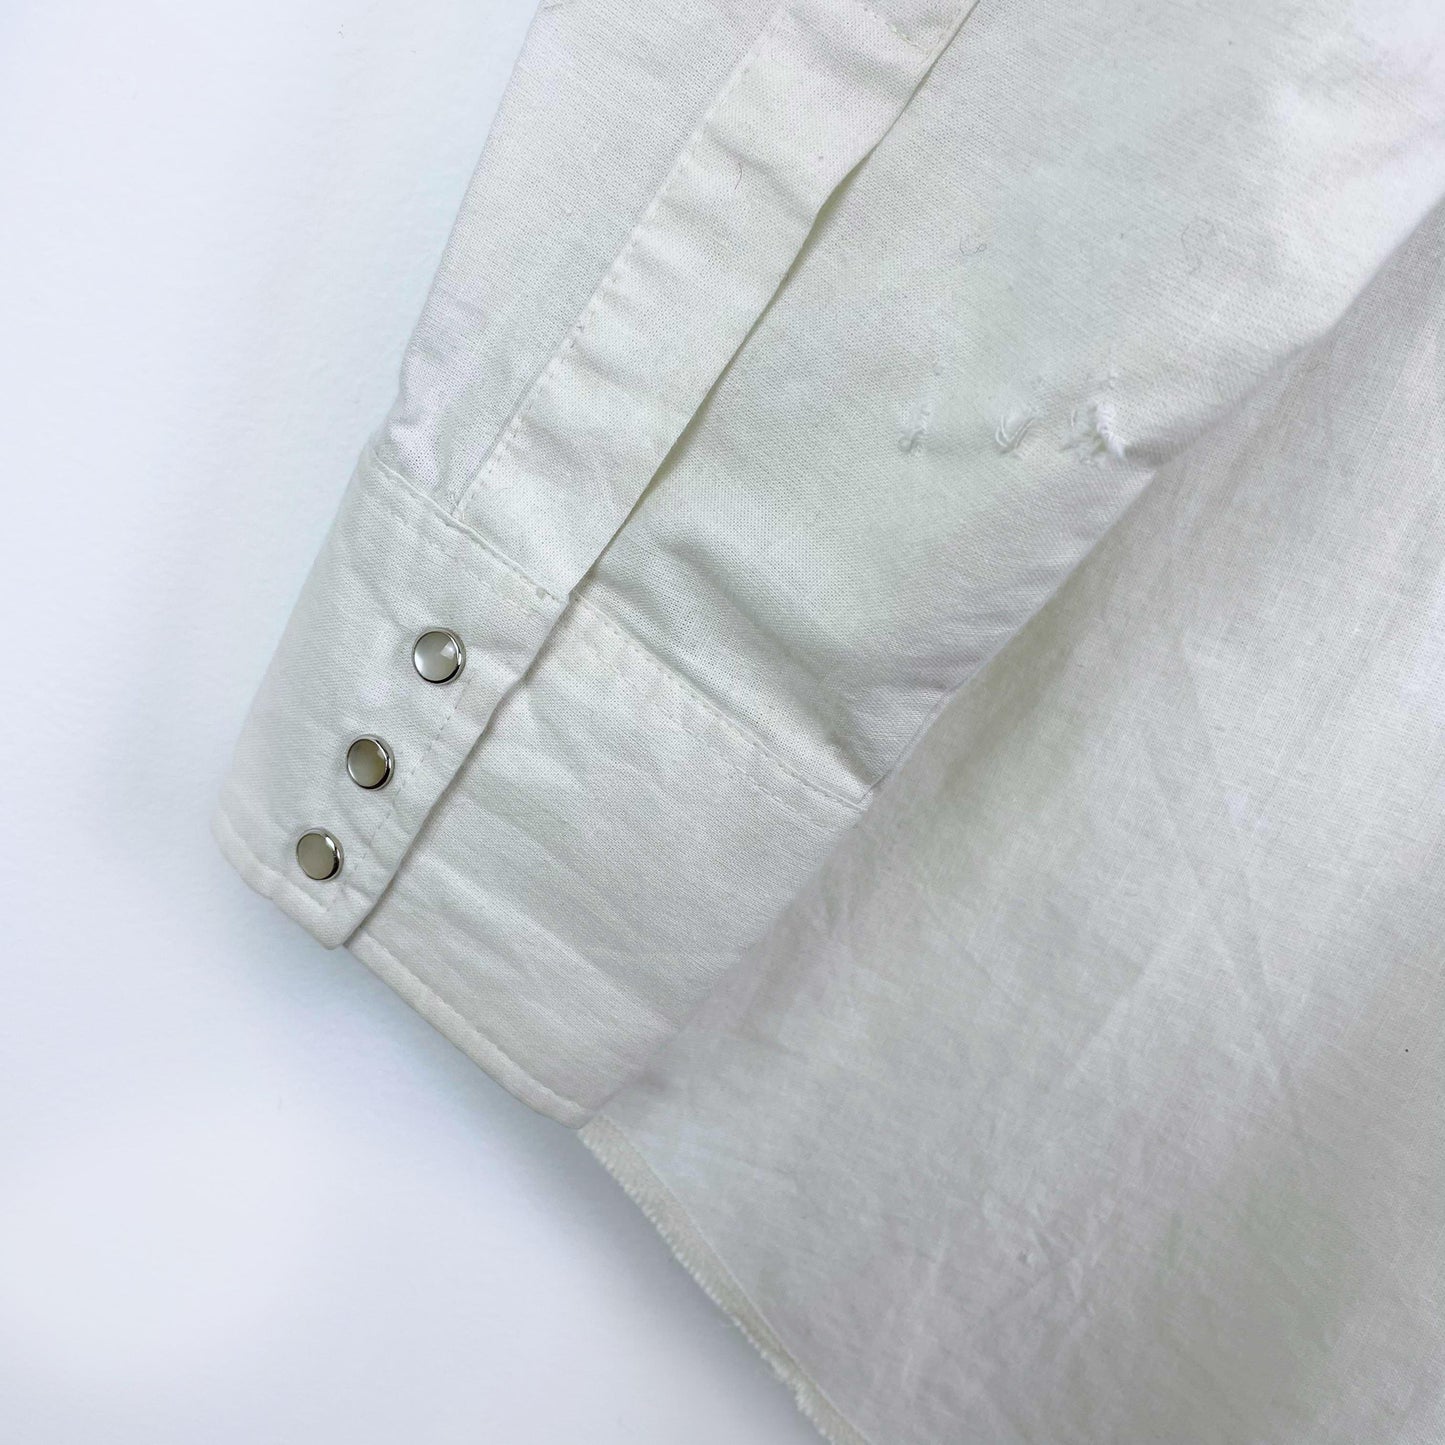 vintage 90s wrangler snap button western shirt - size large